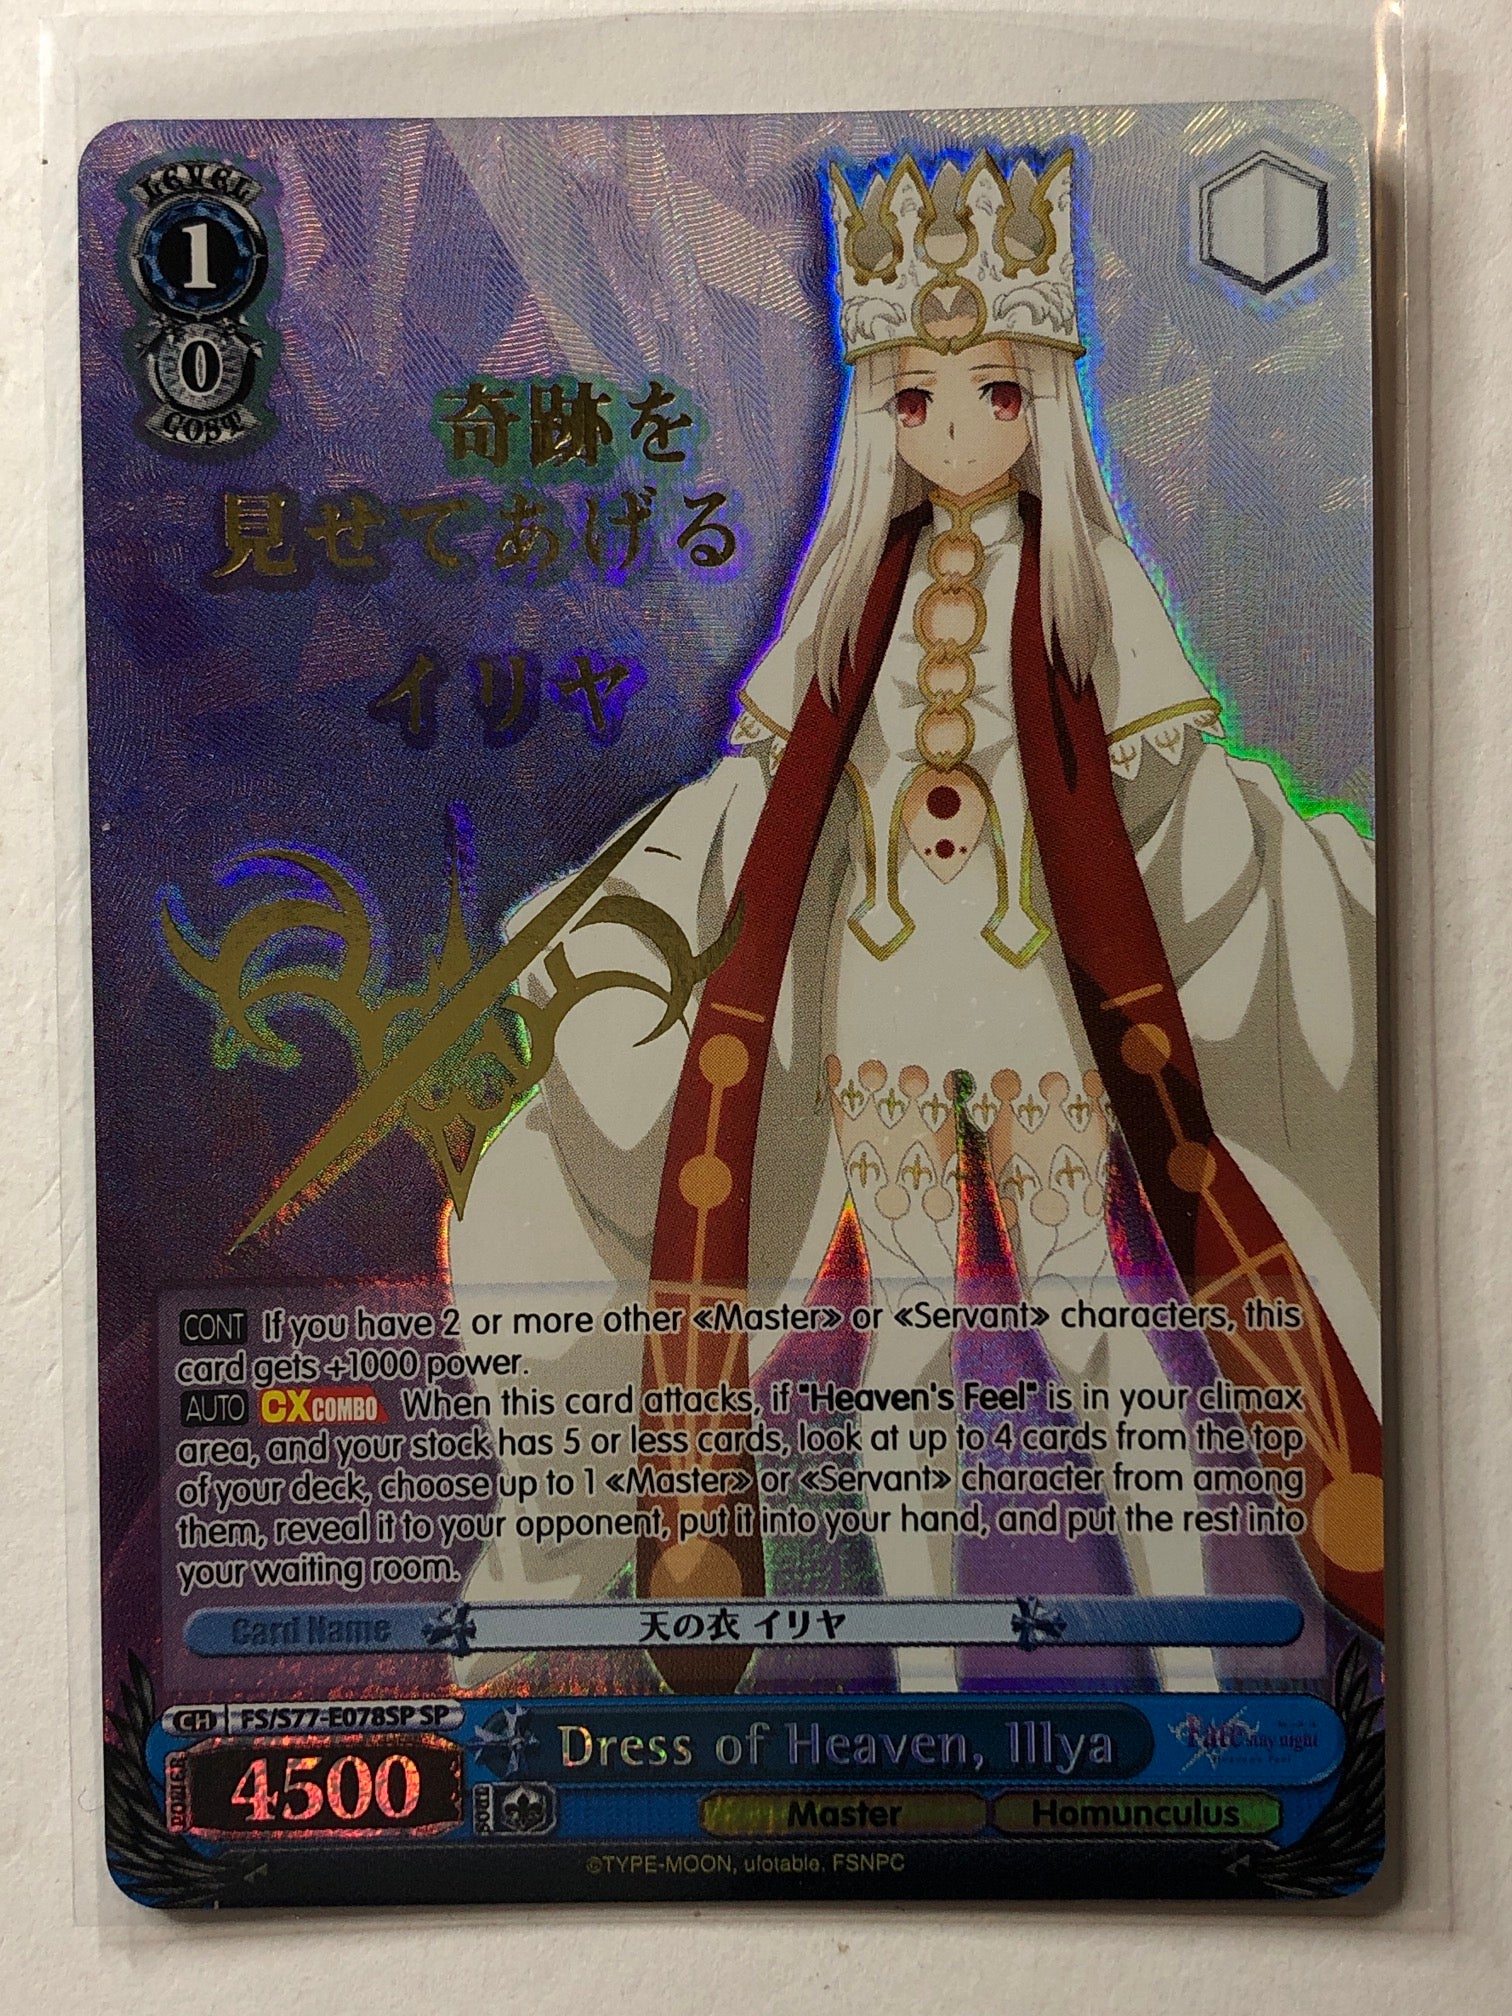 Dress of Heaven, Illya - FS/S77-E078SP (SIGNATURE CARD) (M/NM)